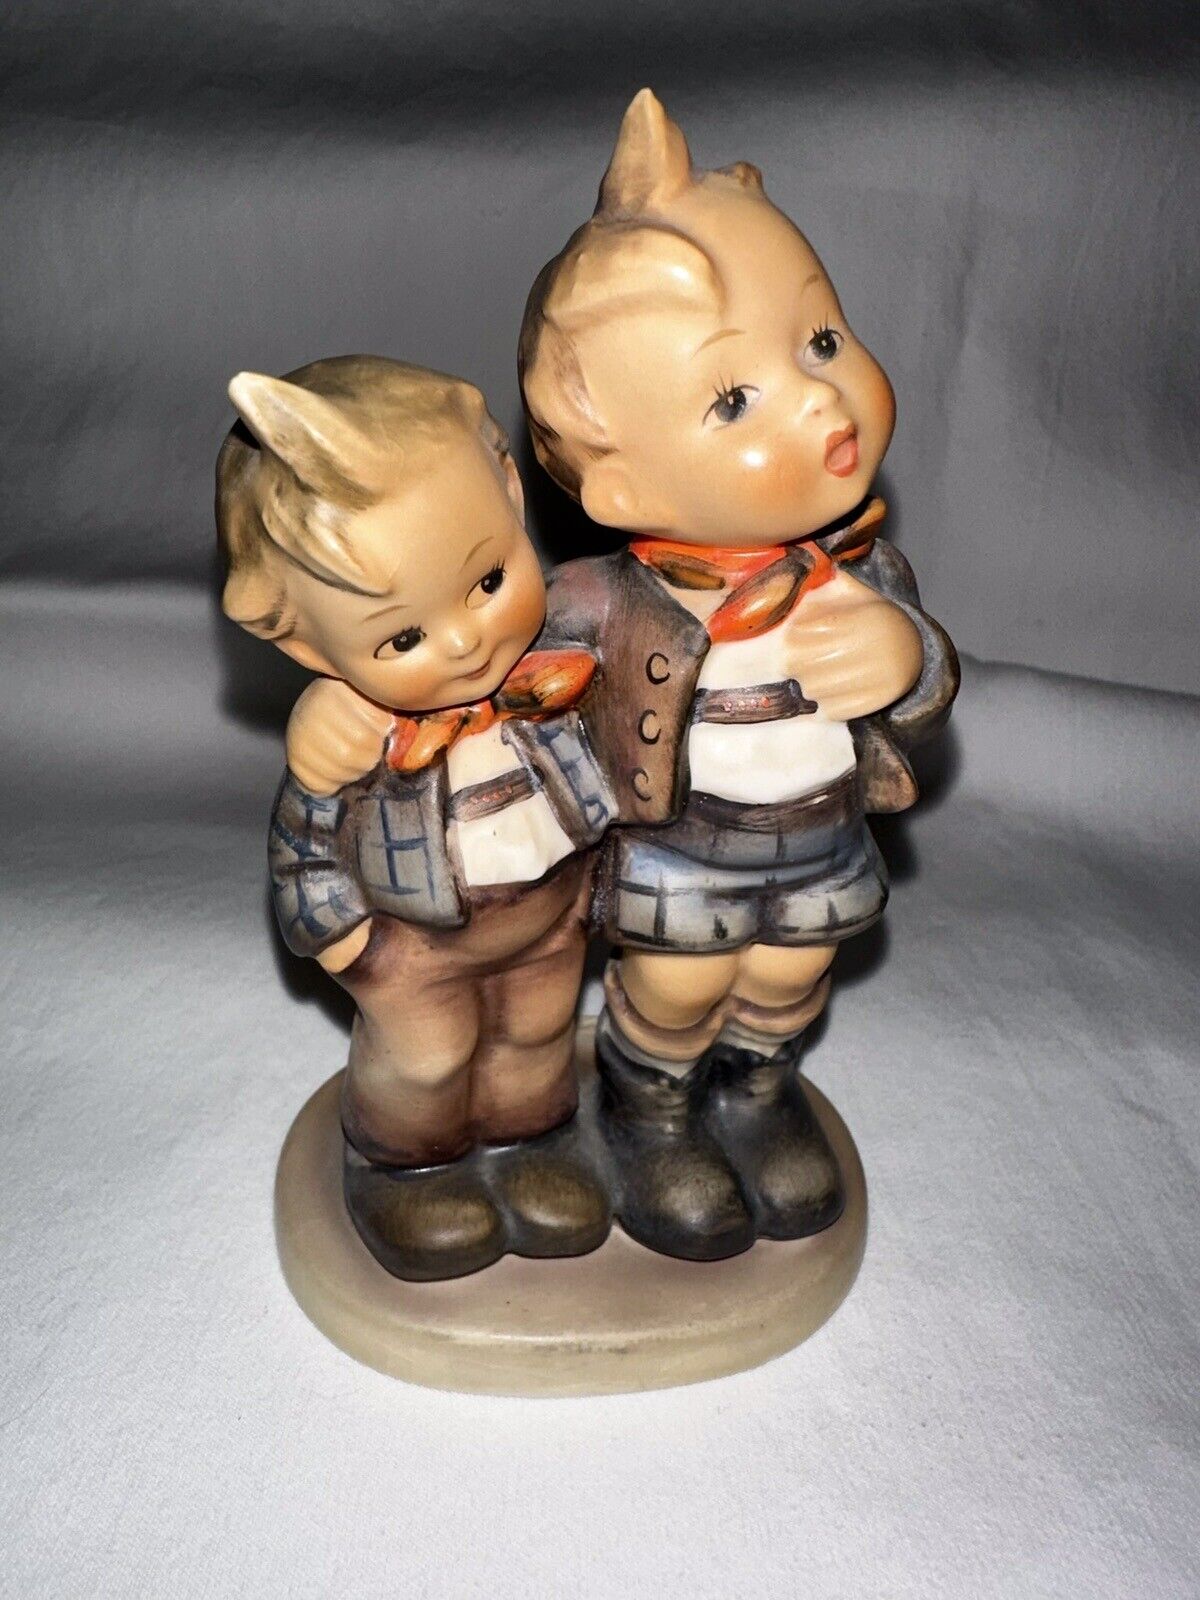 Vintage Hummel Goebel Figurine Max And Moritz #123 Made in West Germany